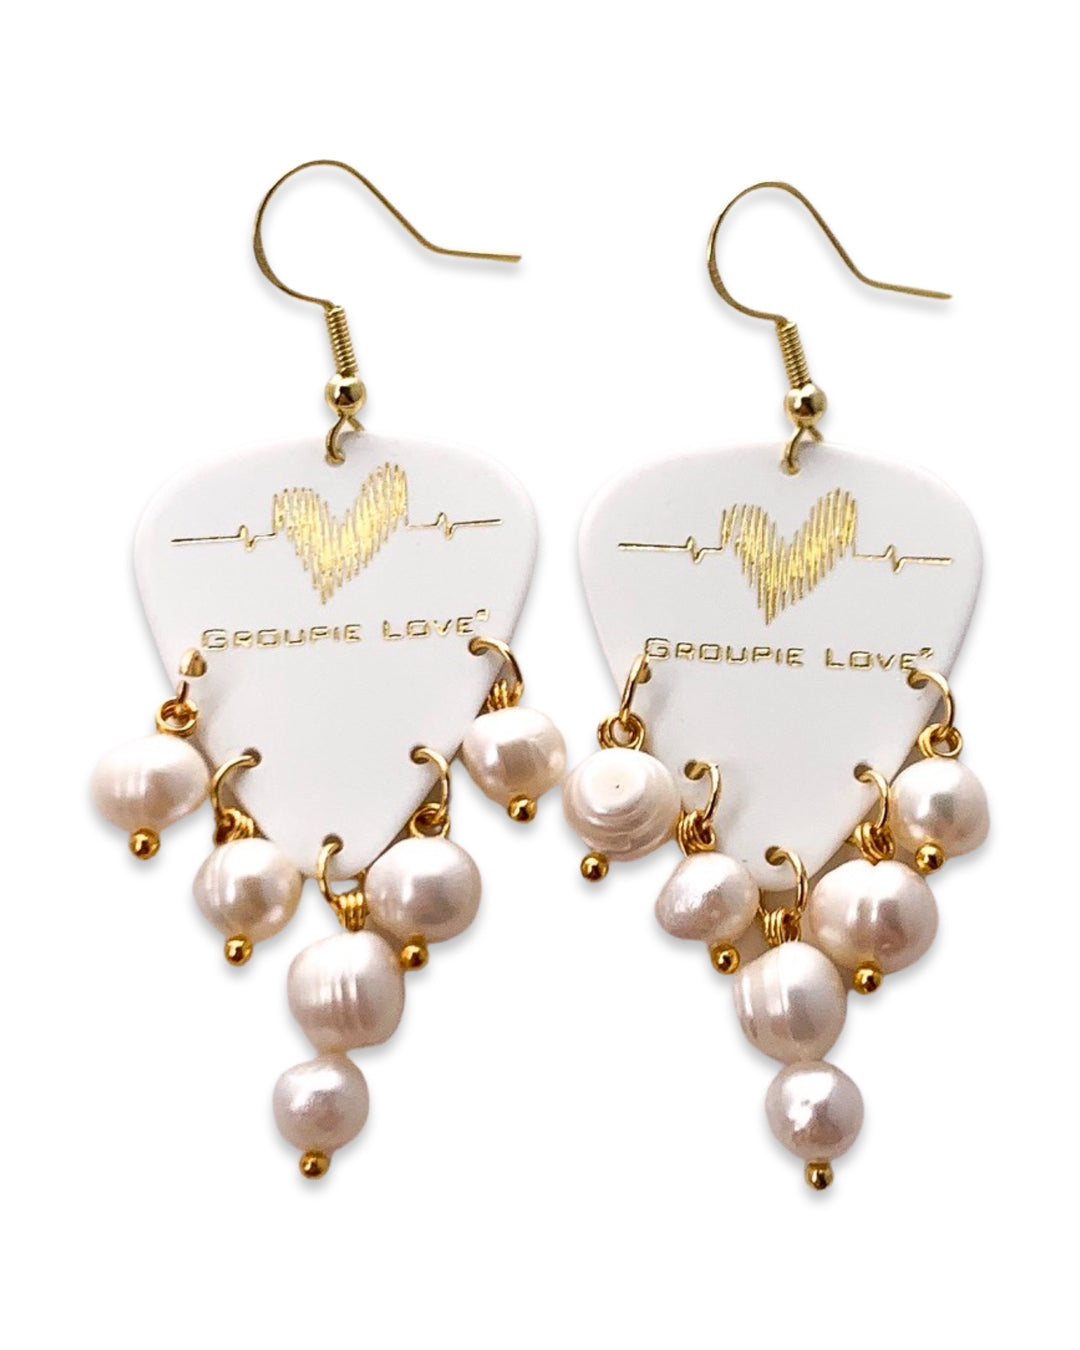 Groupie Love White Gold Pearl Guitar Pick Earrings